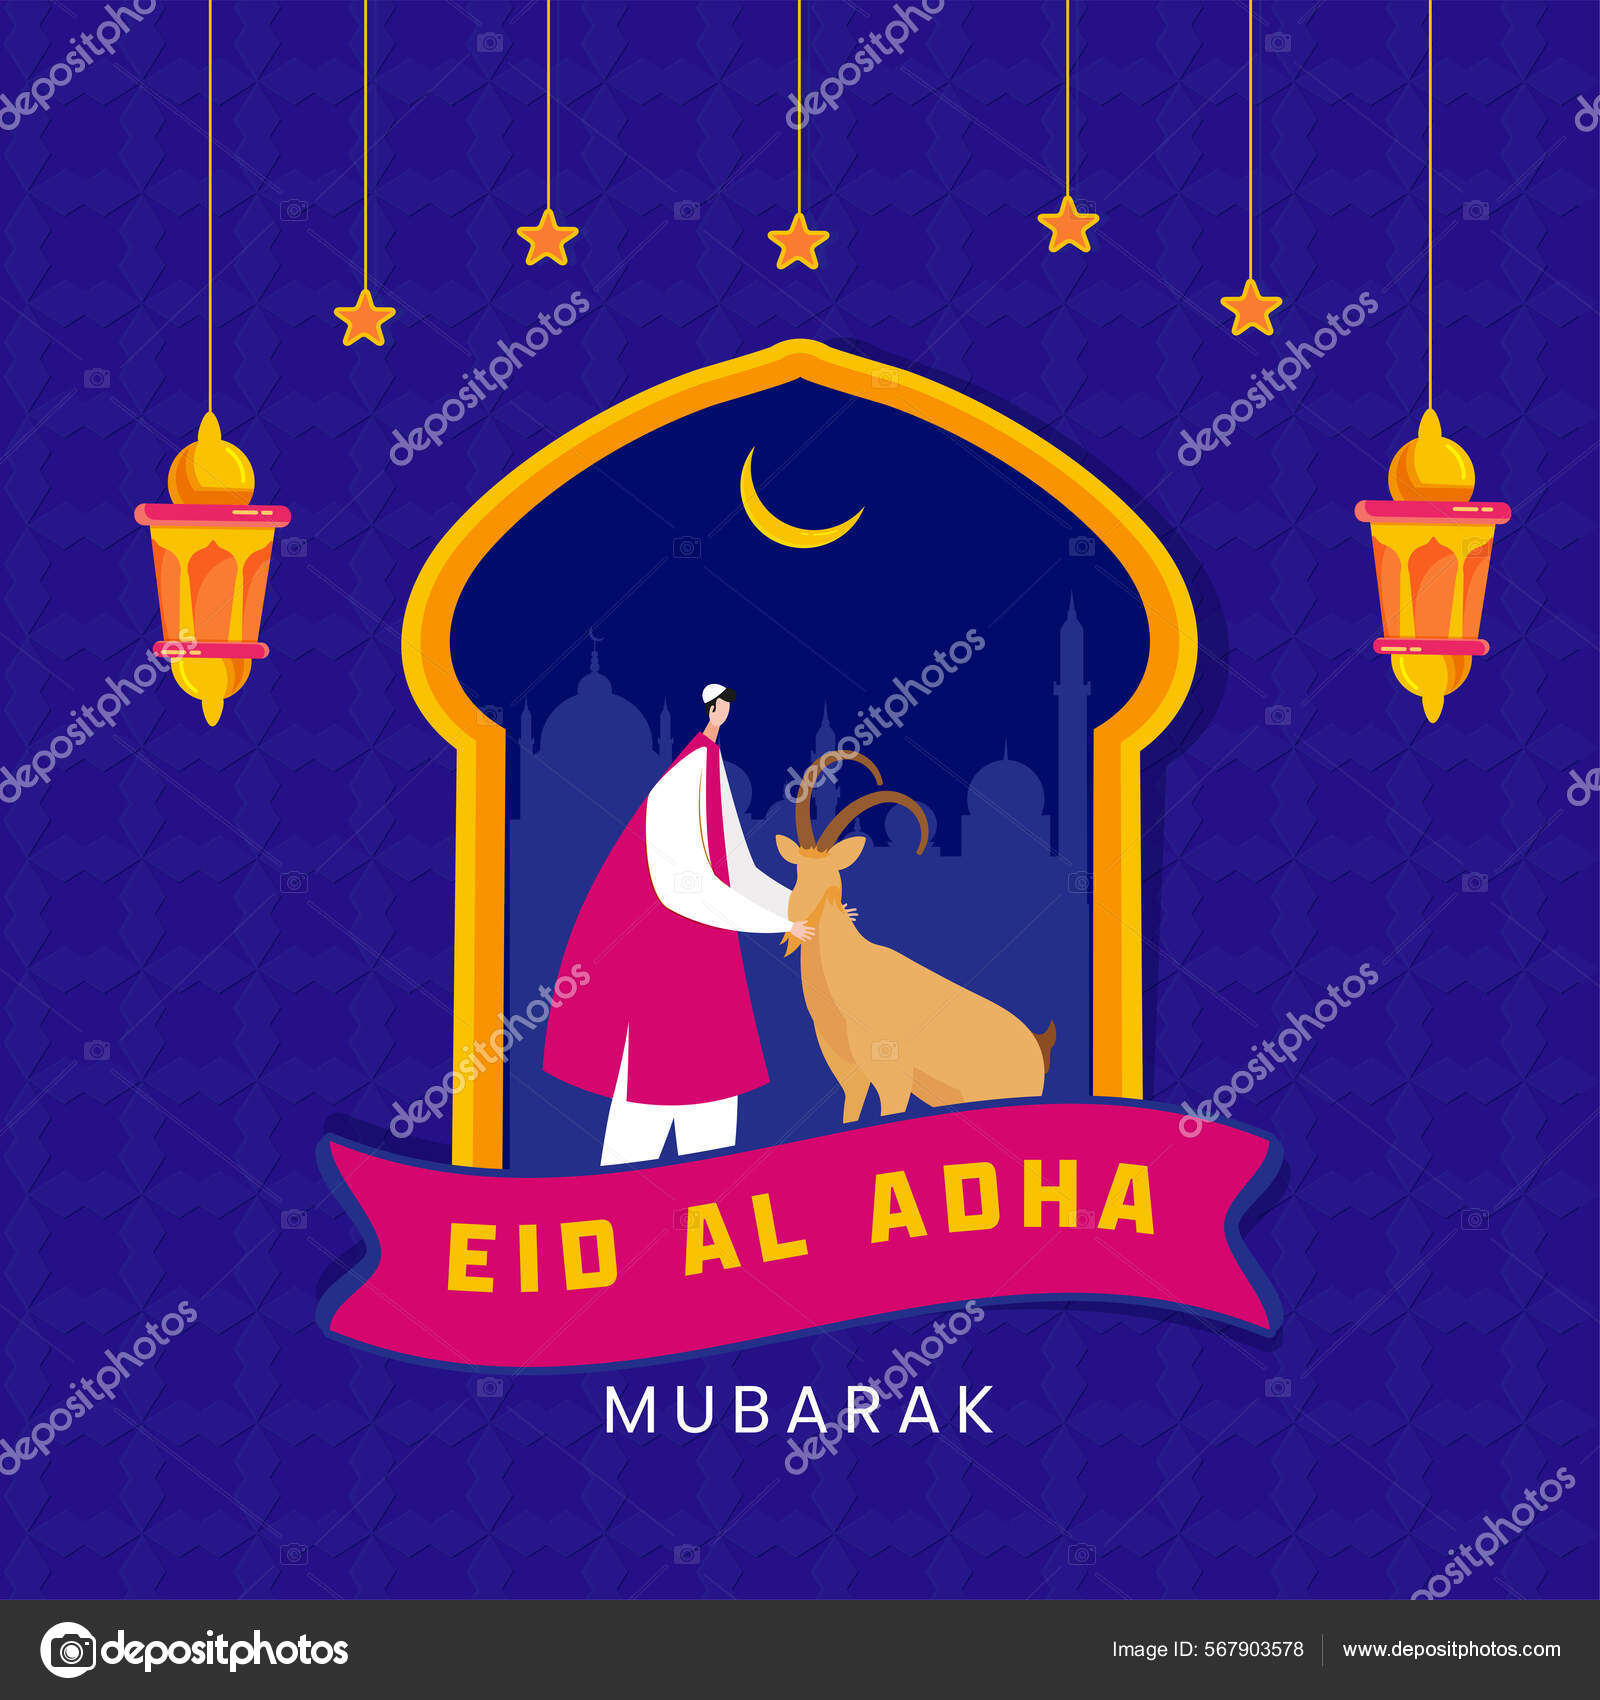 Eid Adha Mubarak Poster Design Islamic Cartoon Man Holding Goat Stock ...